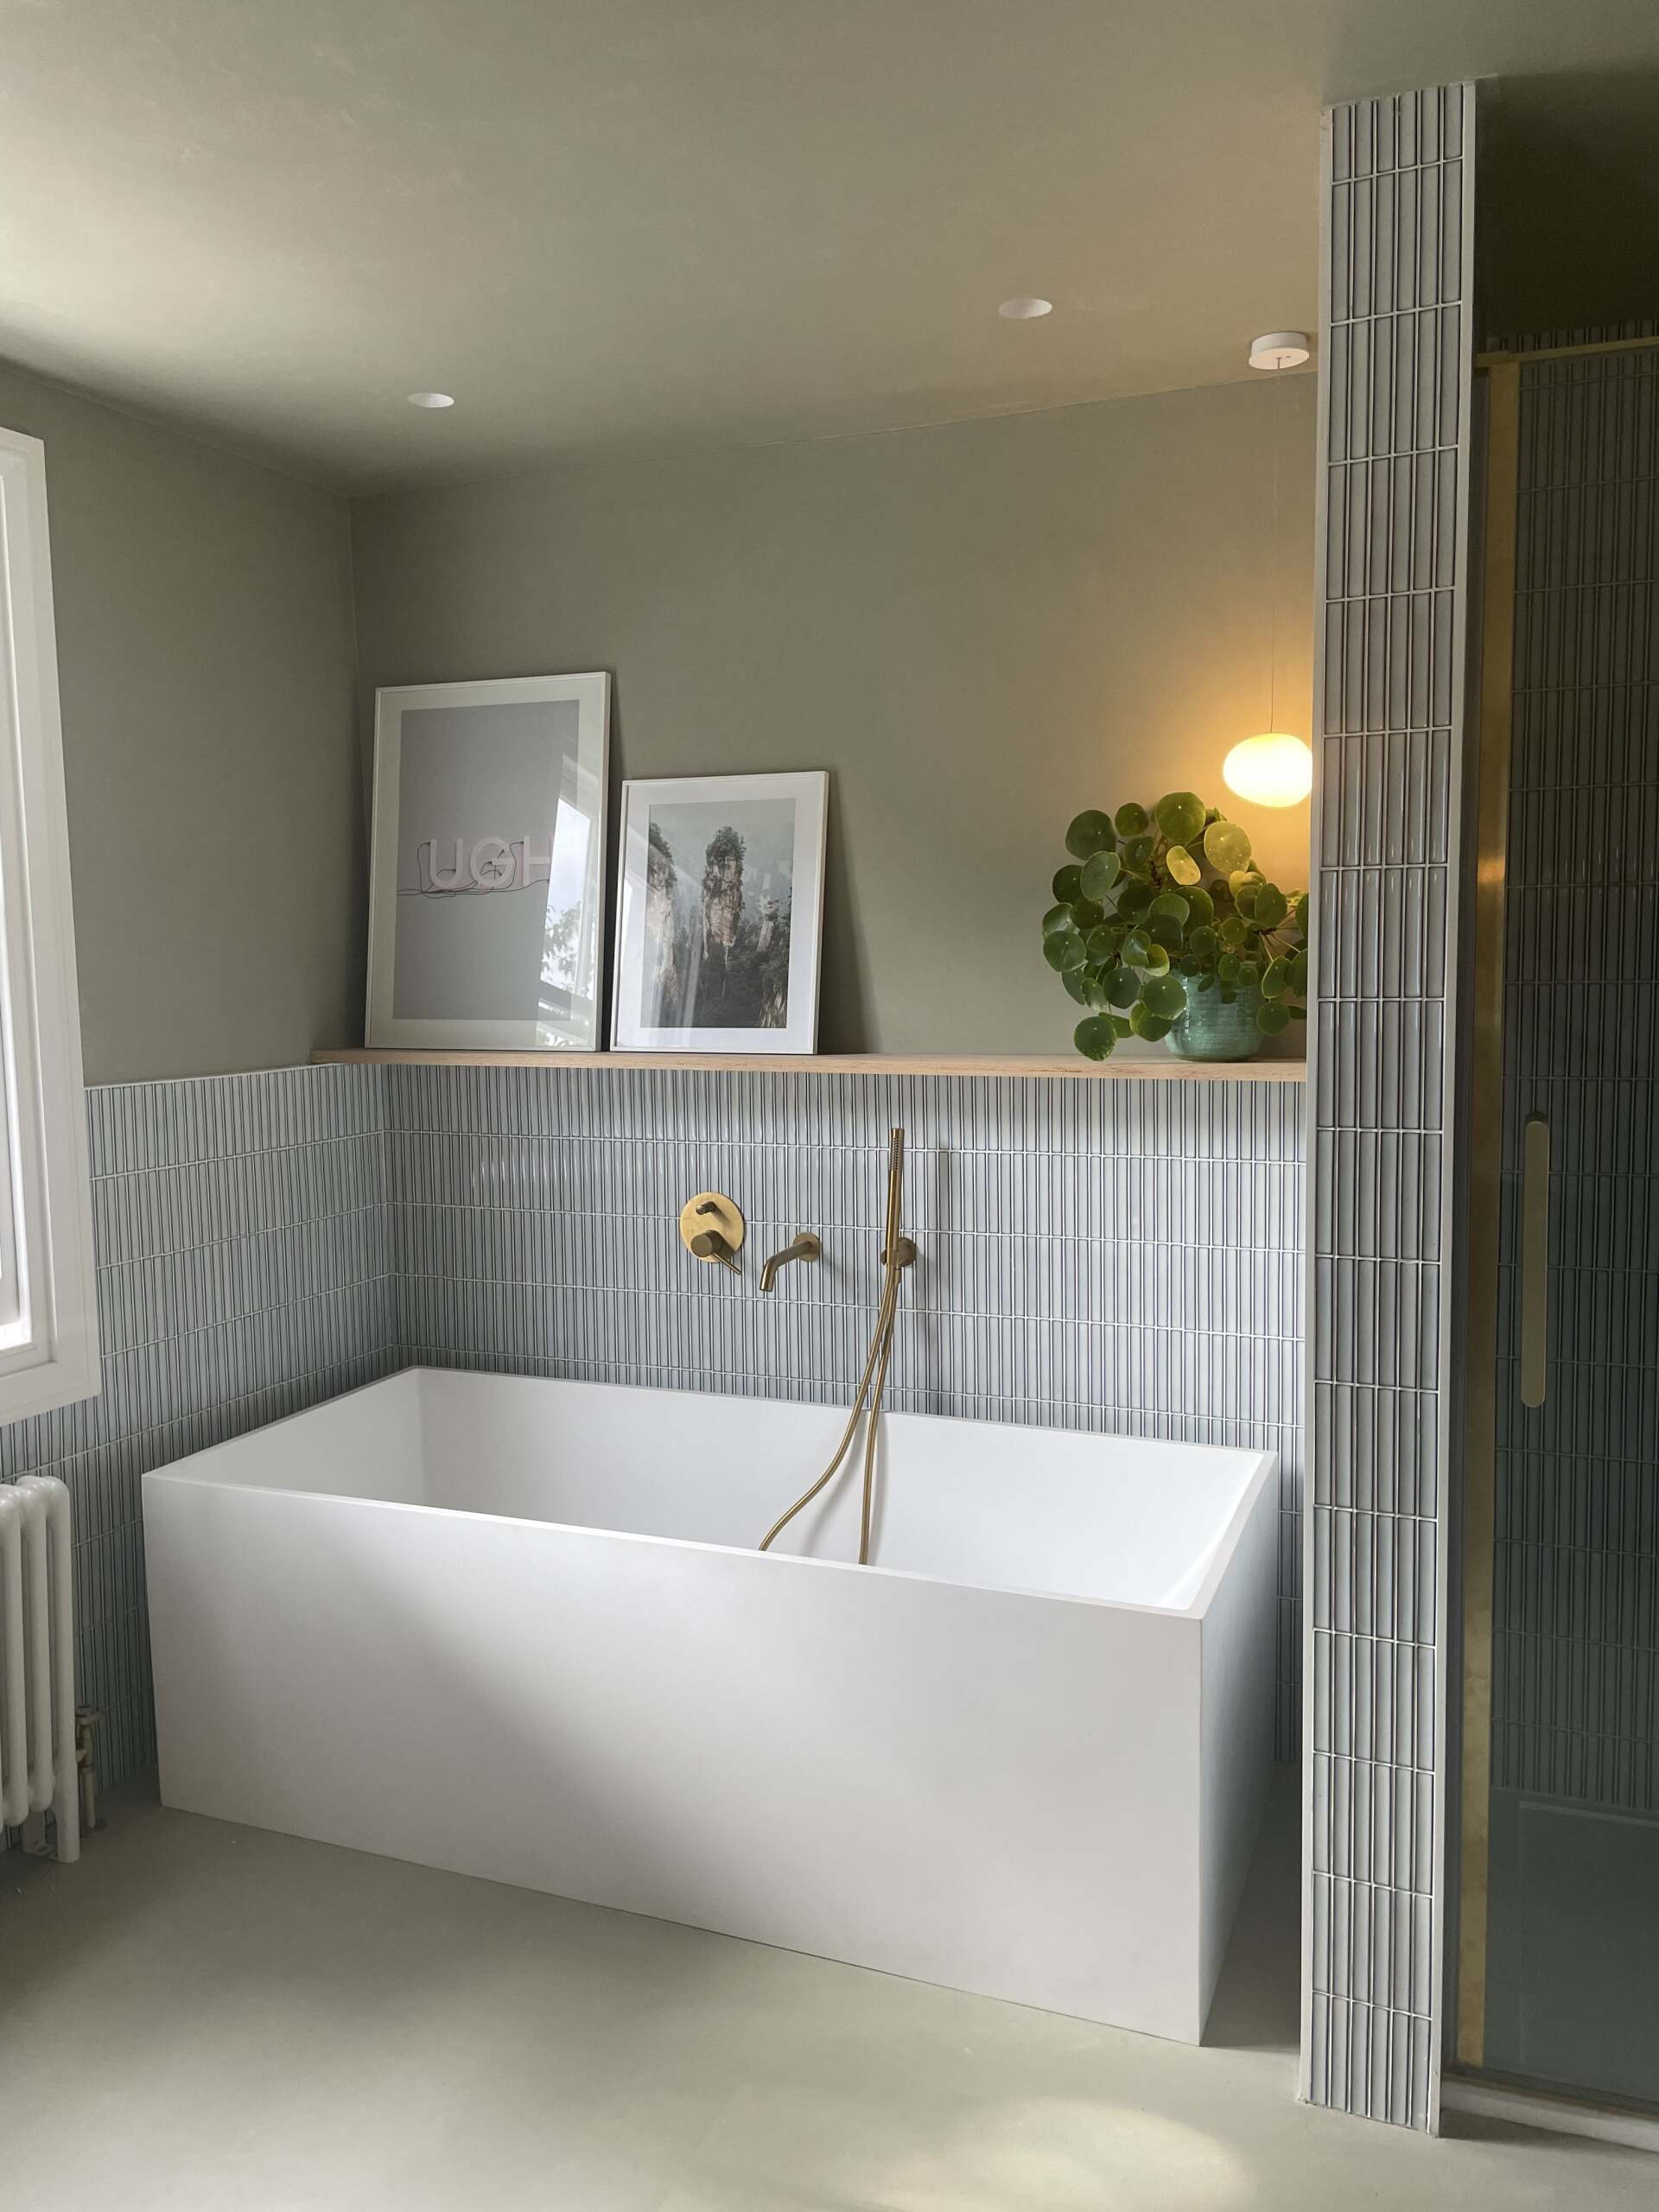 Kit Kat Gris mosaic bath surround, white bathtub and brass shower head